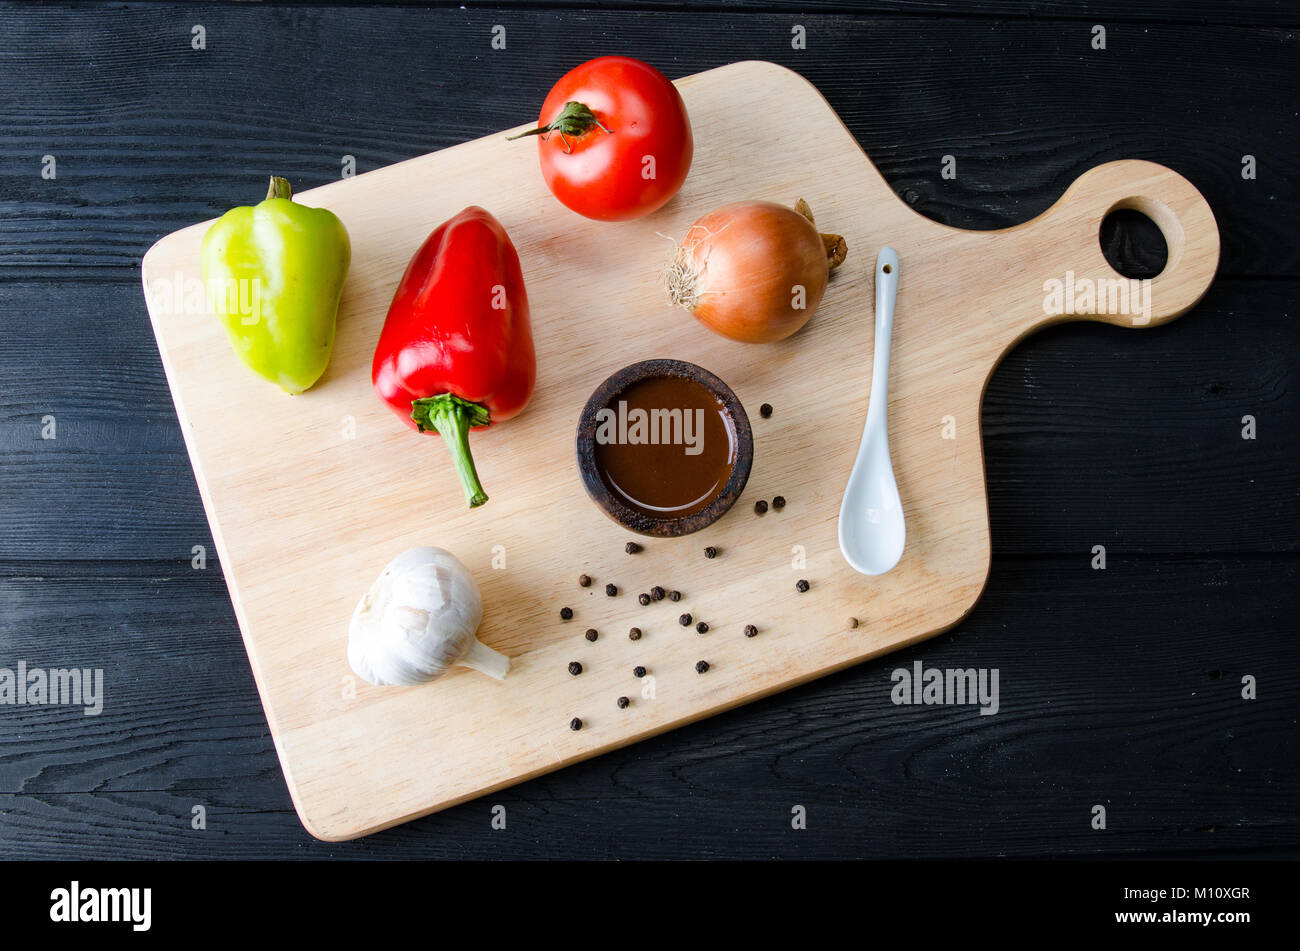 Ingredients ready for italian pasta sauce Stock Photo - Alamy